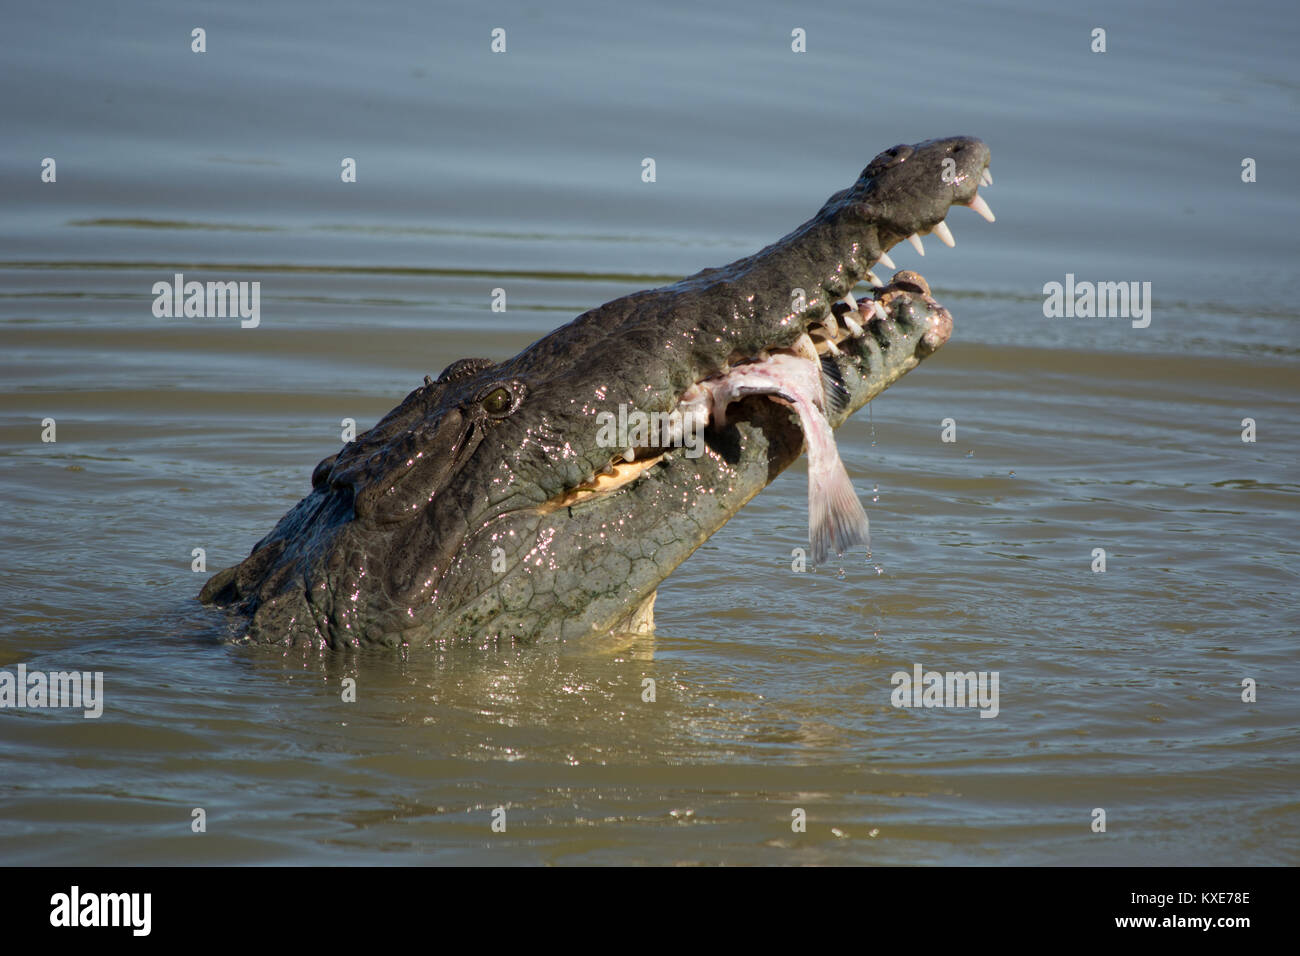 Spitzkrokodil (Crocodylus acutus) von Monroe County, Florida, USA. Stockfoto